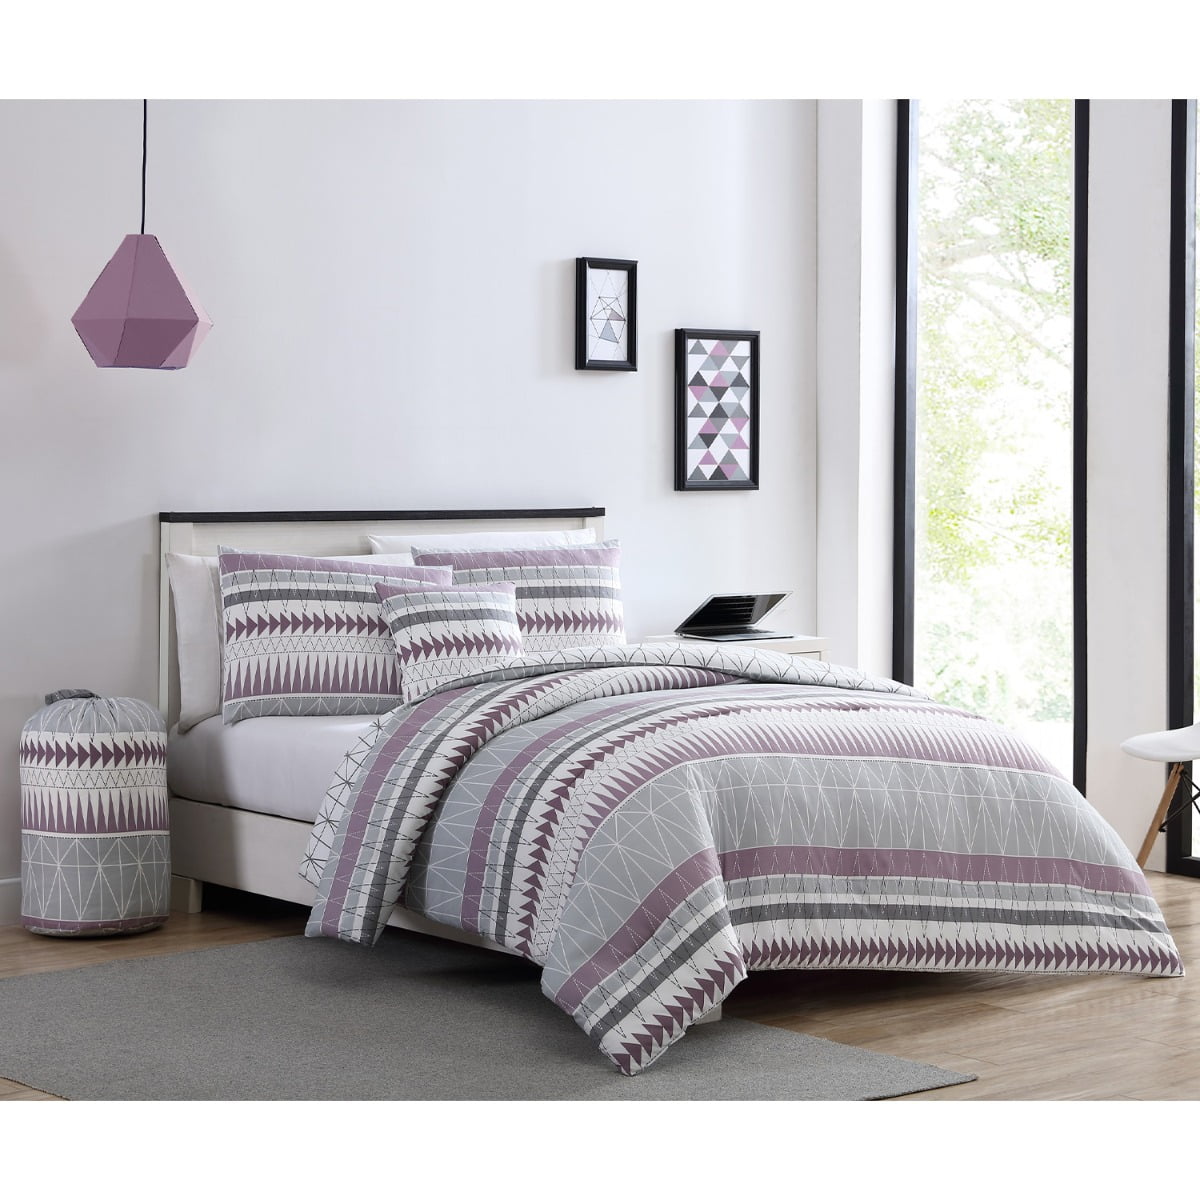 Dorm Comforter And Sham Bedding Set, Twin Xl Bed Sets Dorm